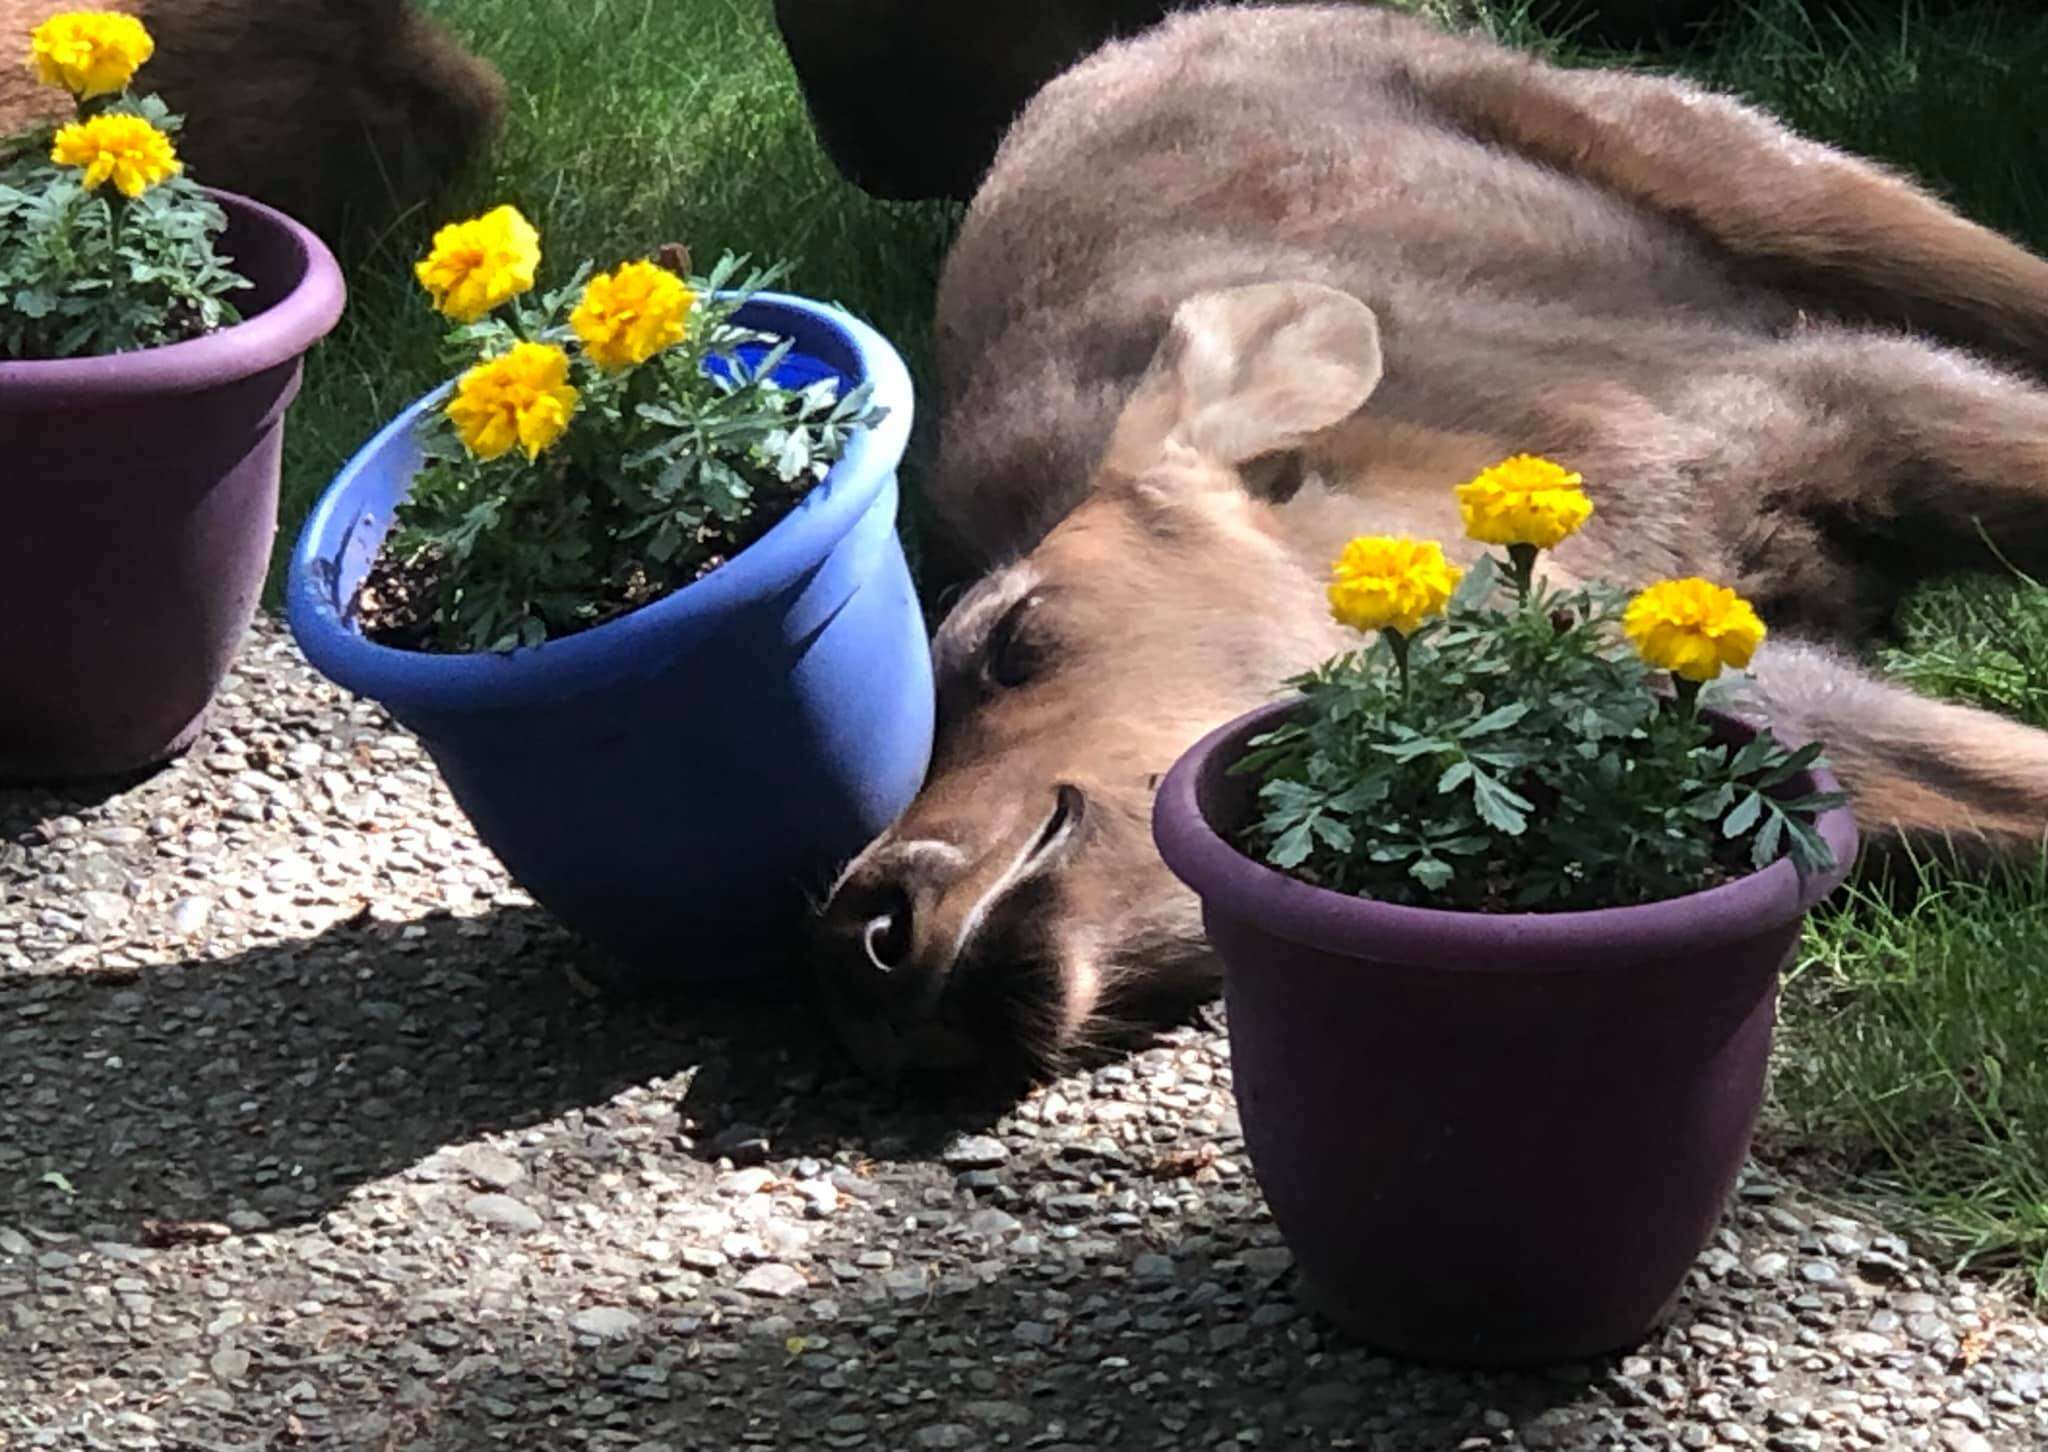 Baby moose knocks over flower pot